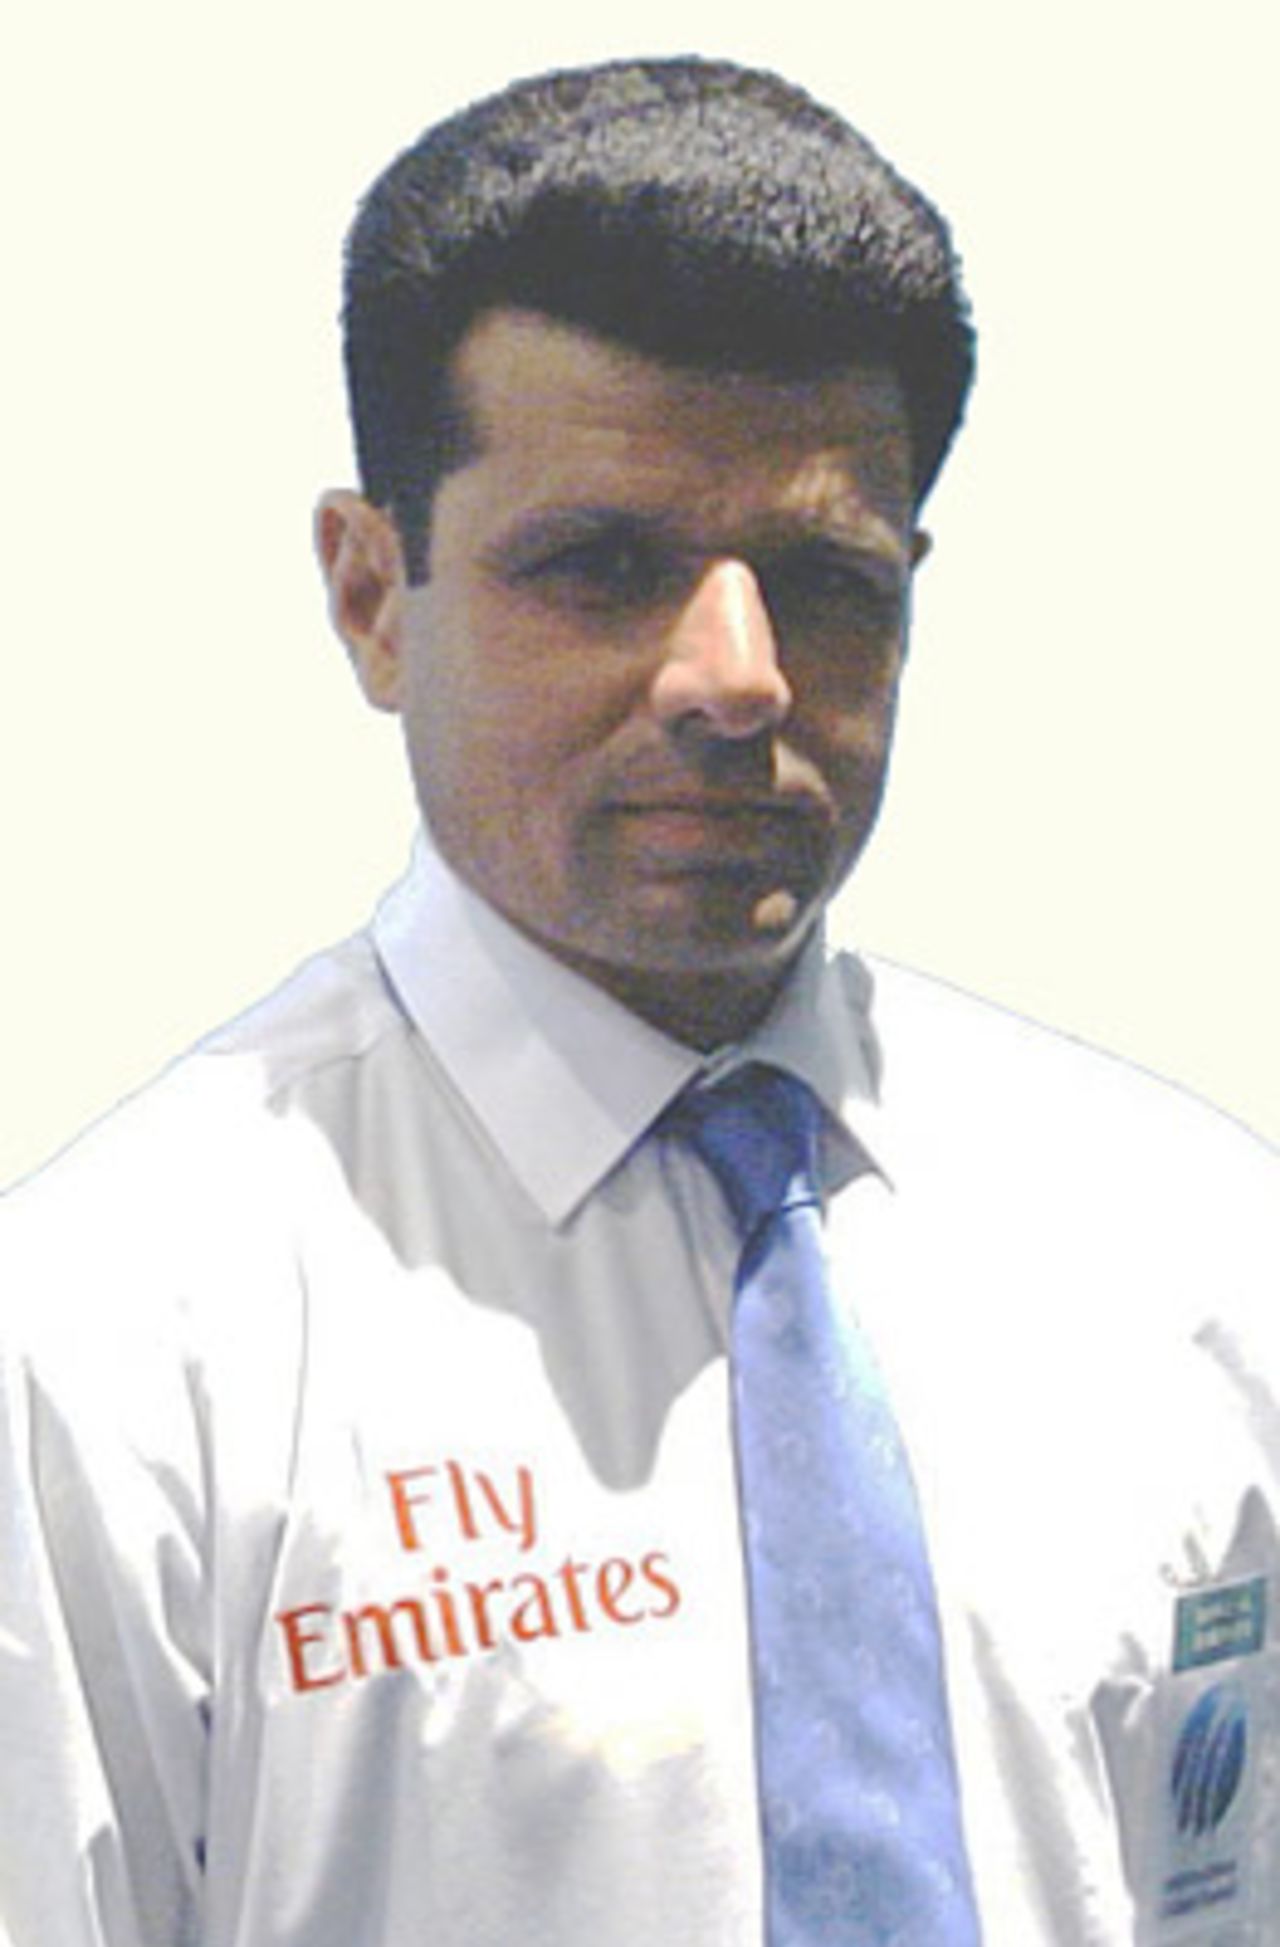 Aleem Dar - ICC Portrait 2004, ICC Referee